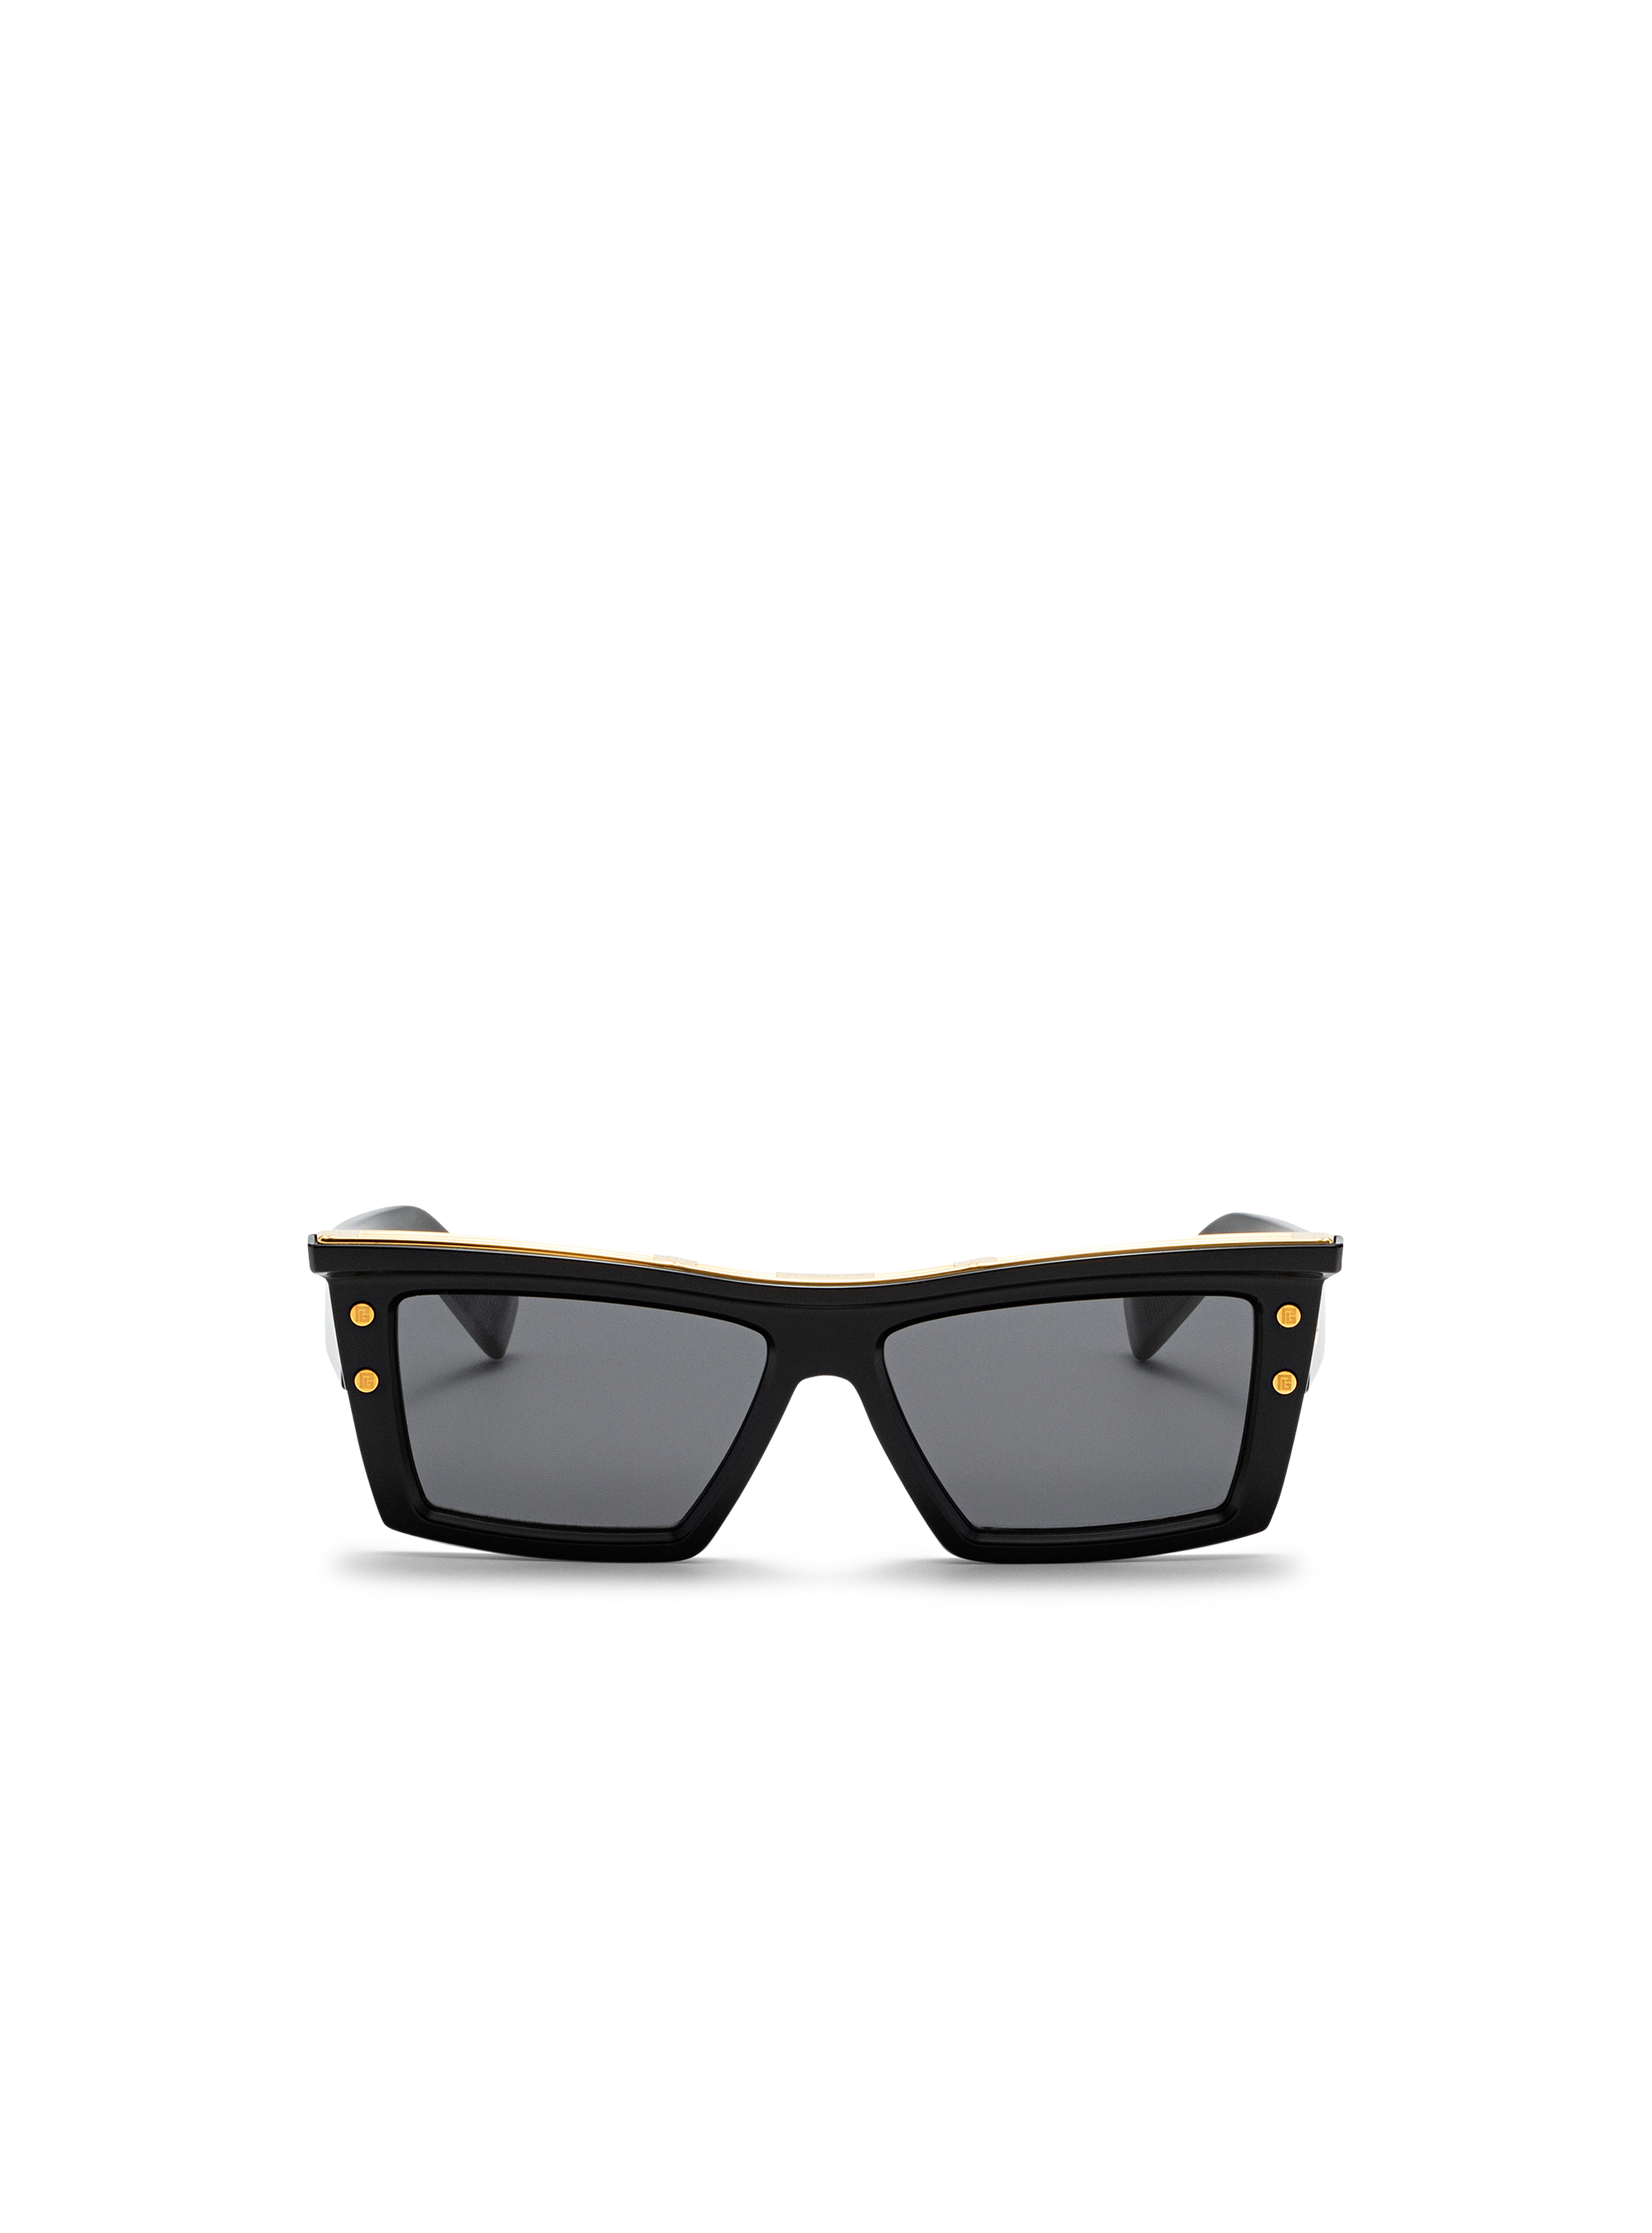 B-VII太阳眼镜, black